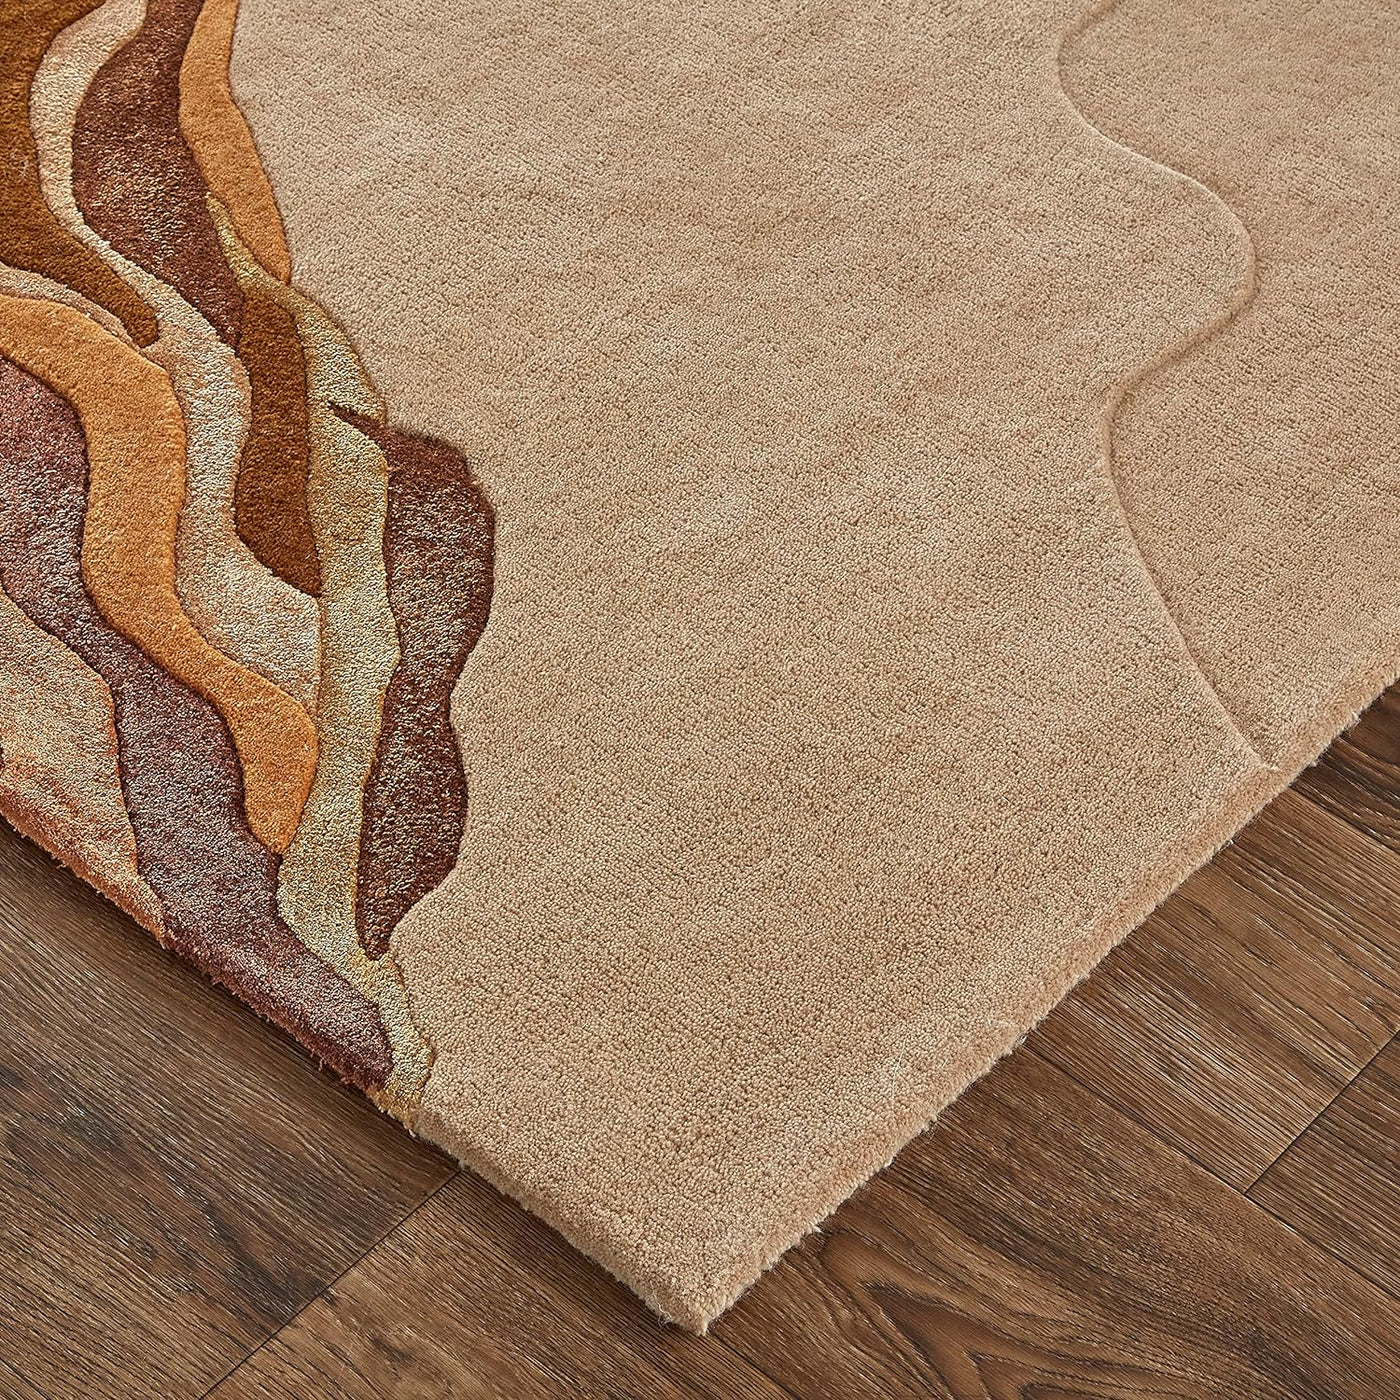 Serrano Modern Wool Rug, Orange/Beige, 8' x 10' Area Rug - $690